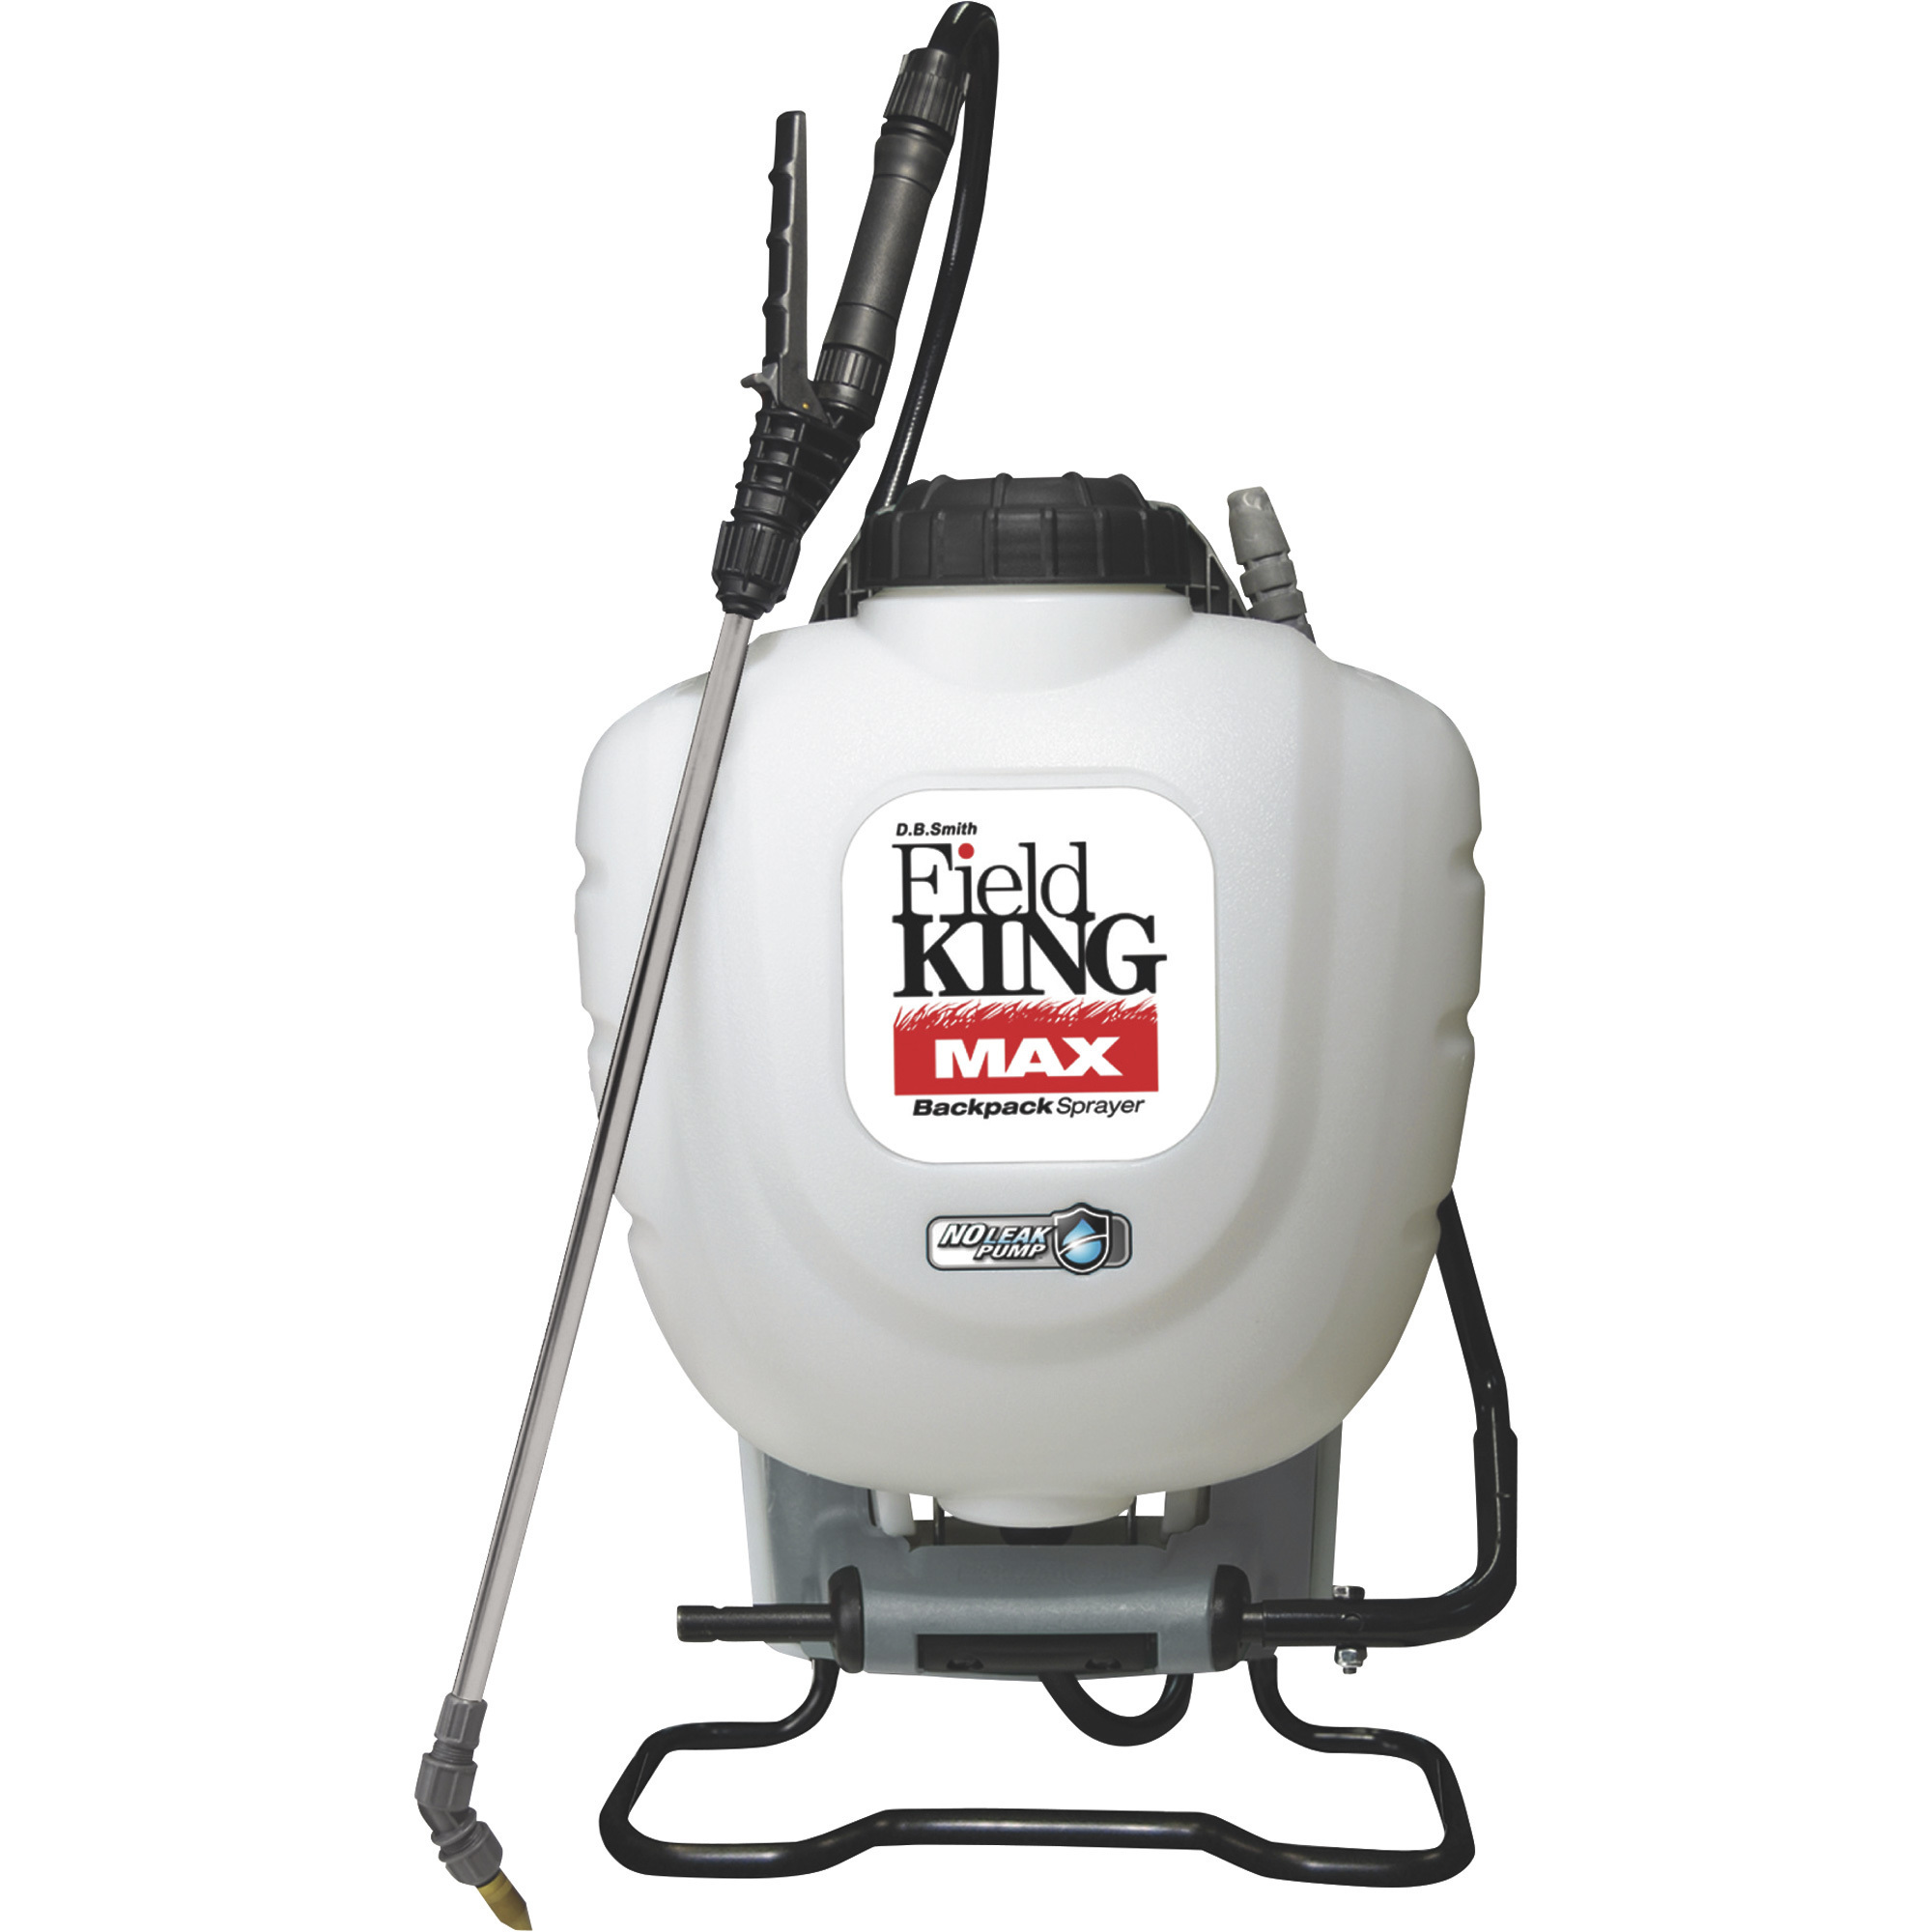 Field King Max Professional No Leak Pump Backpack Sprayer, 4-Gallon Capacity, 150 PSI, Model 190348